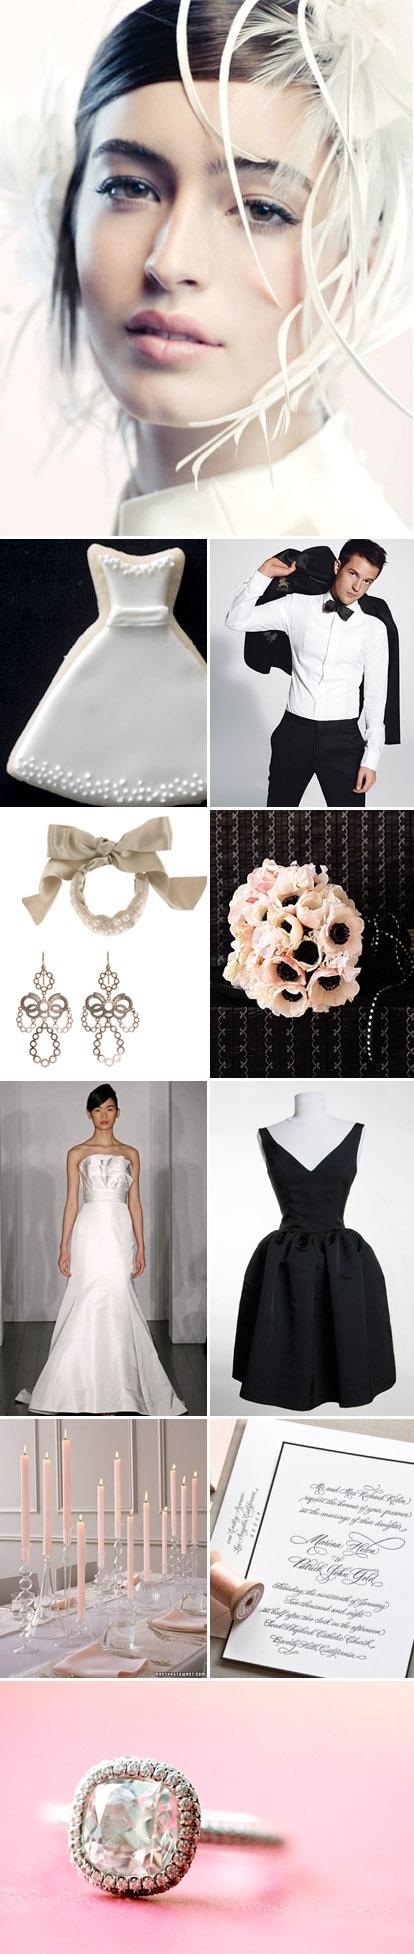 زفاف - Black And White Wedding Details & Decor